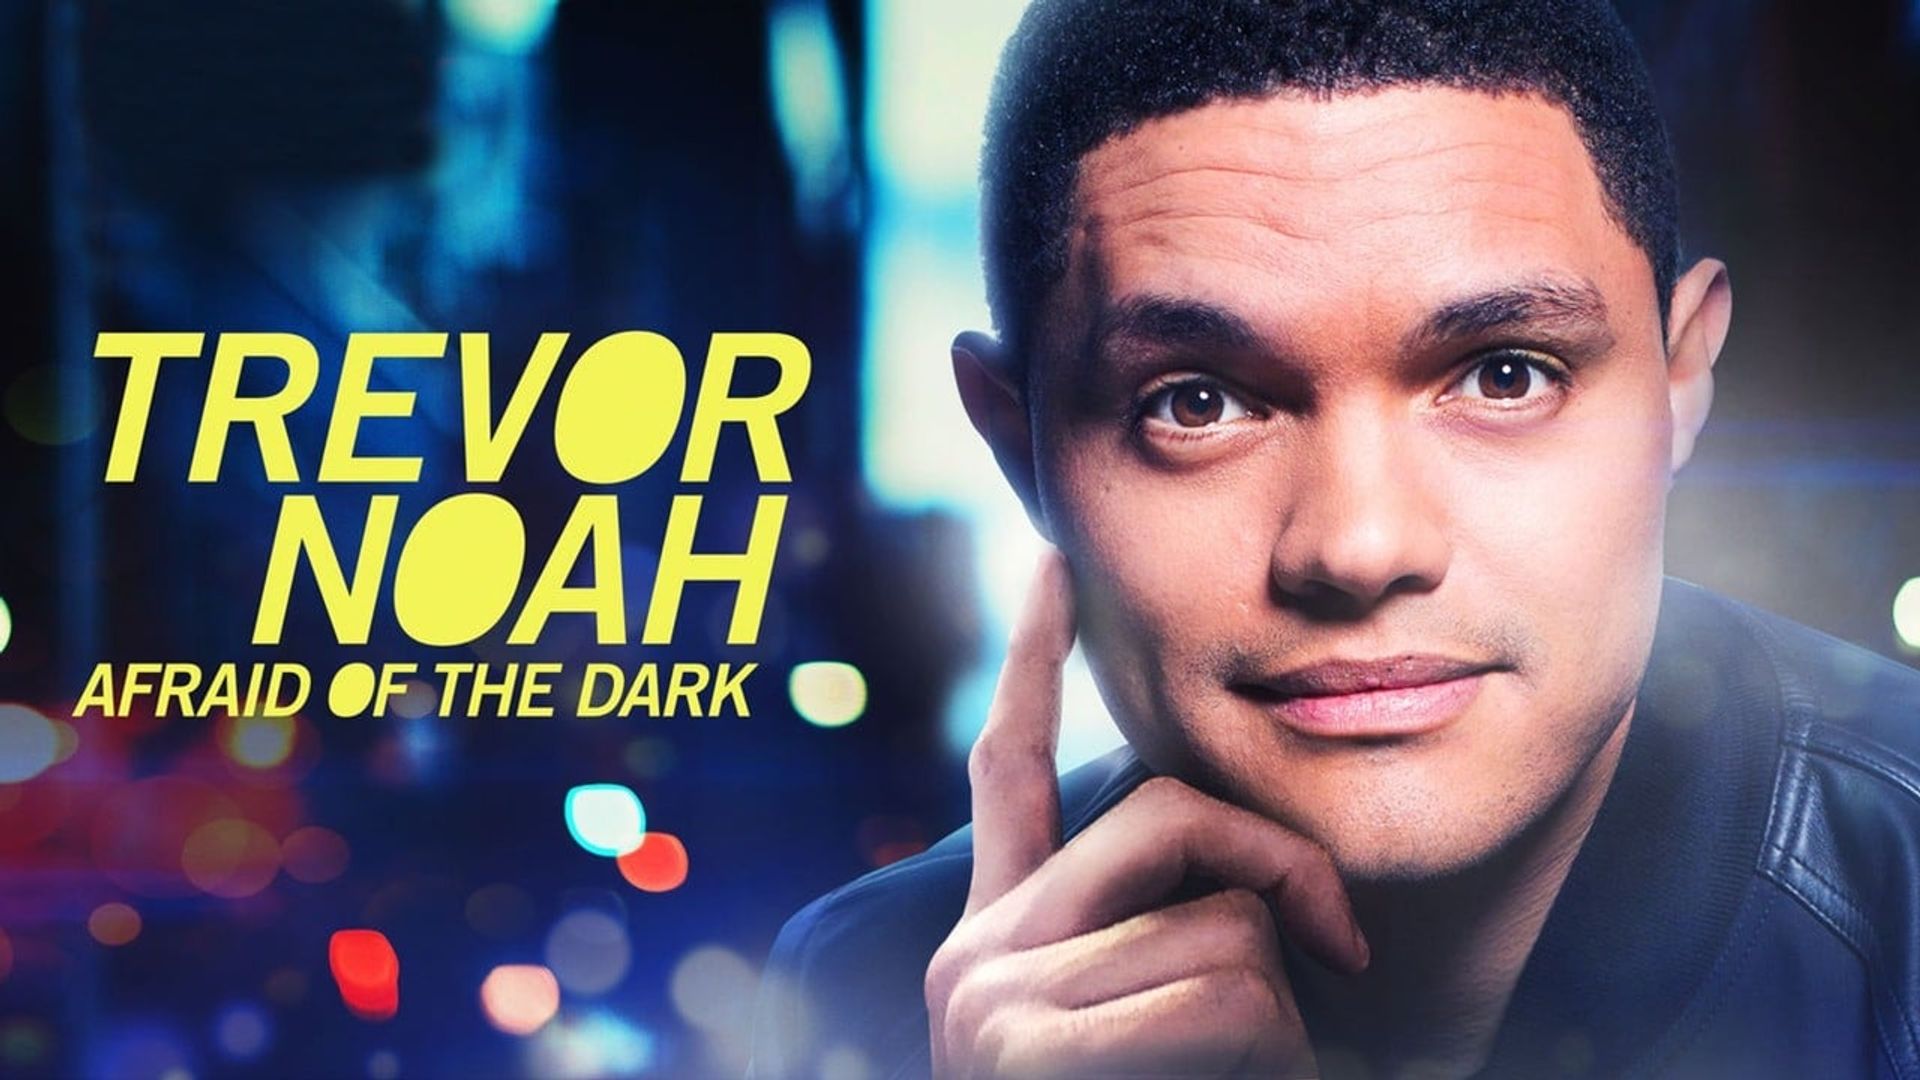 Trevor Noah: Afraid of the Dark background